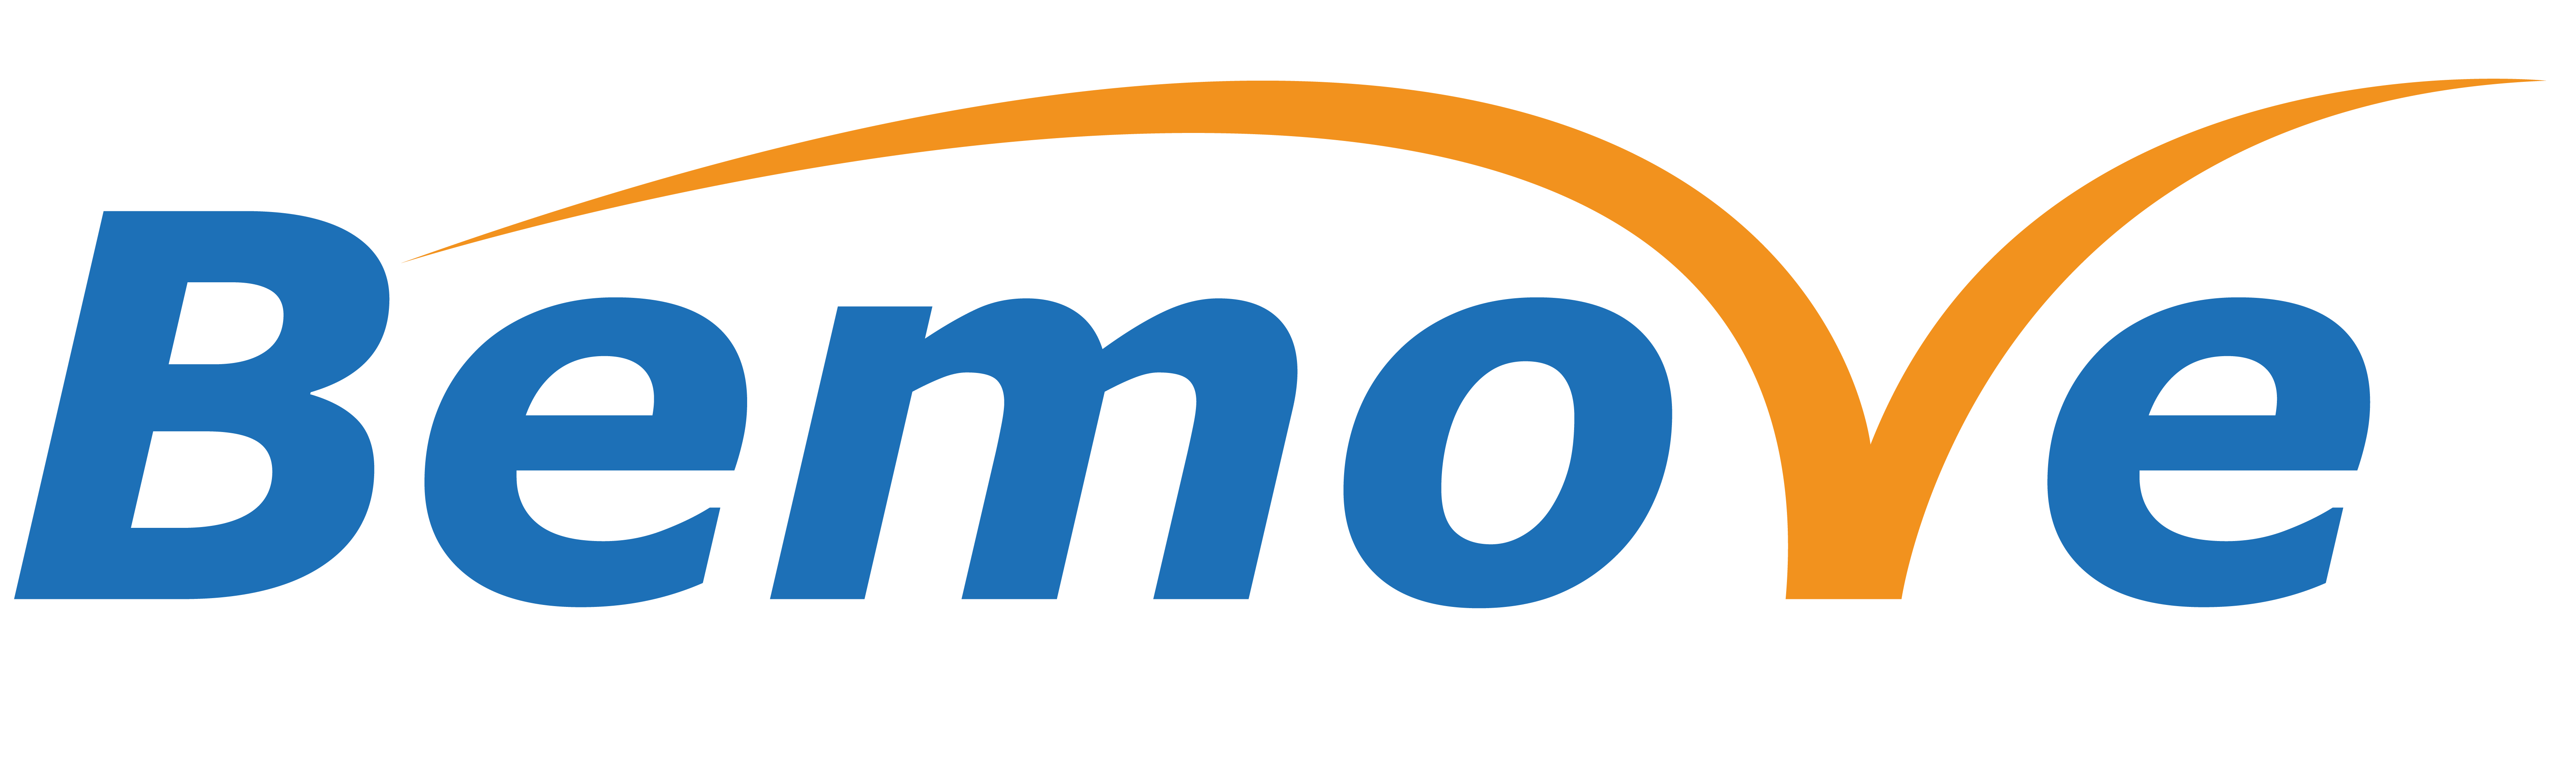 BEMOVE_logo_2021_normal